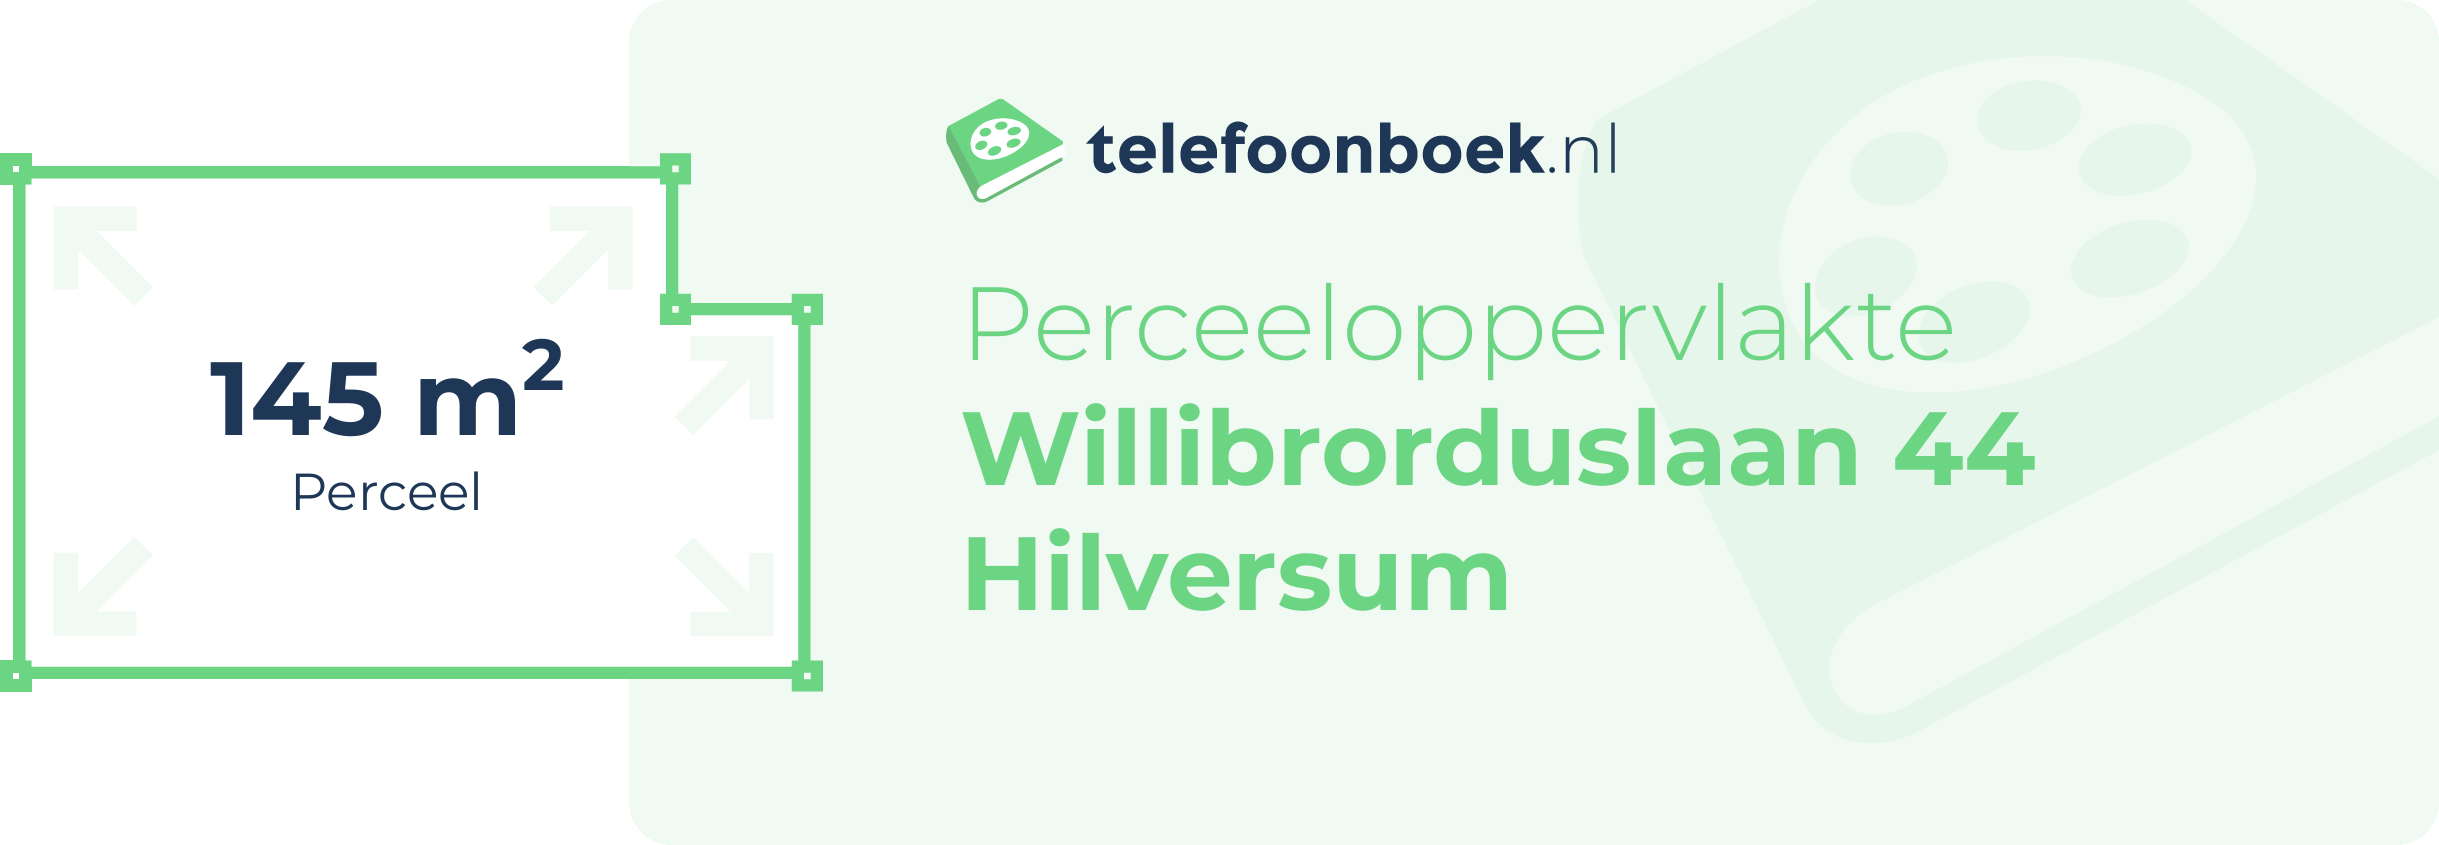 Perceeloppervlakte Willibrorduslaan 44 Hilversum